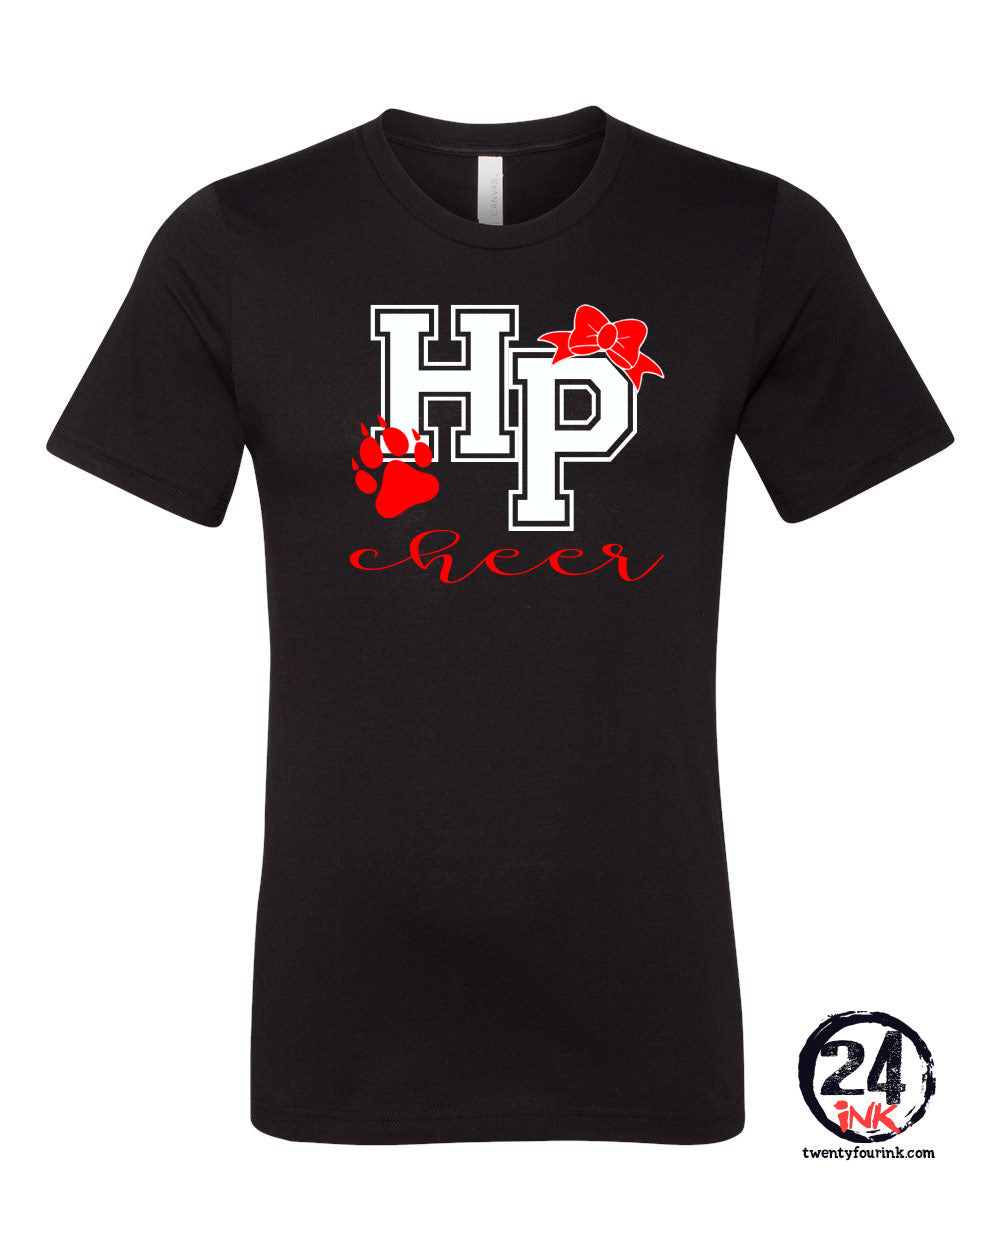 High Point Cheer design 3 T-Shirt